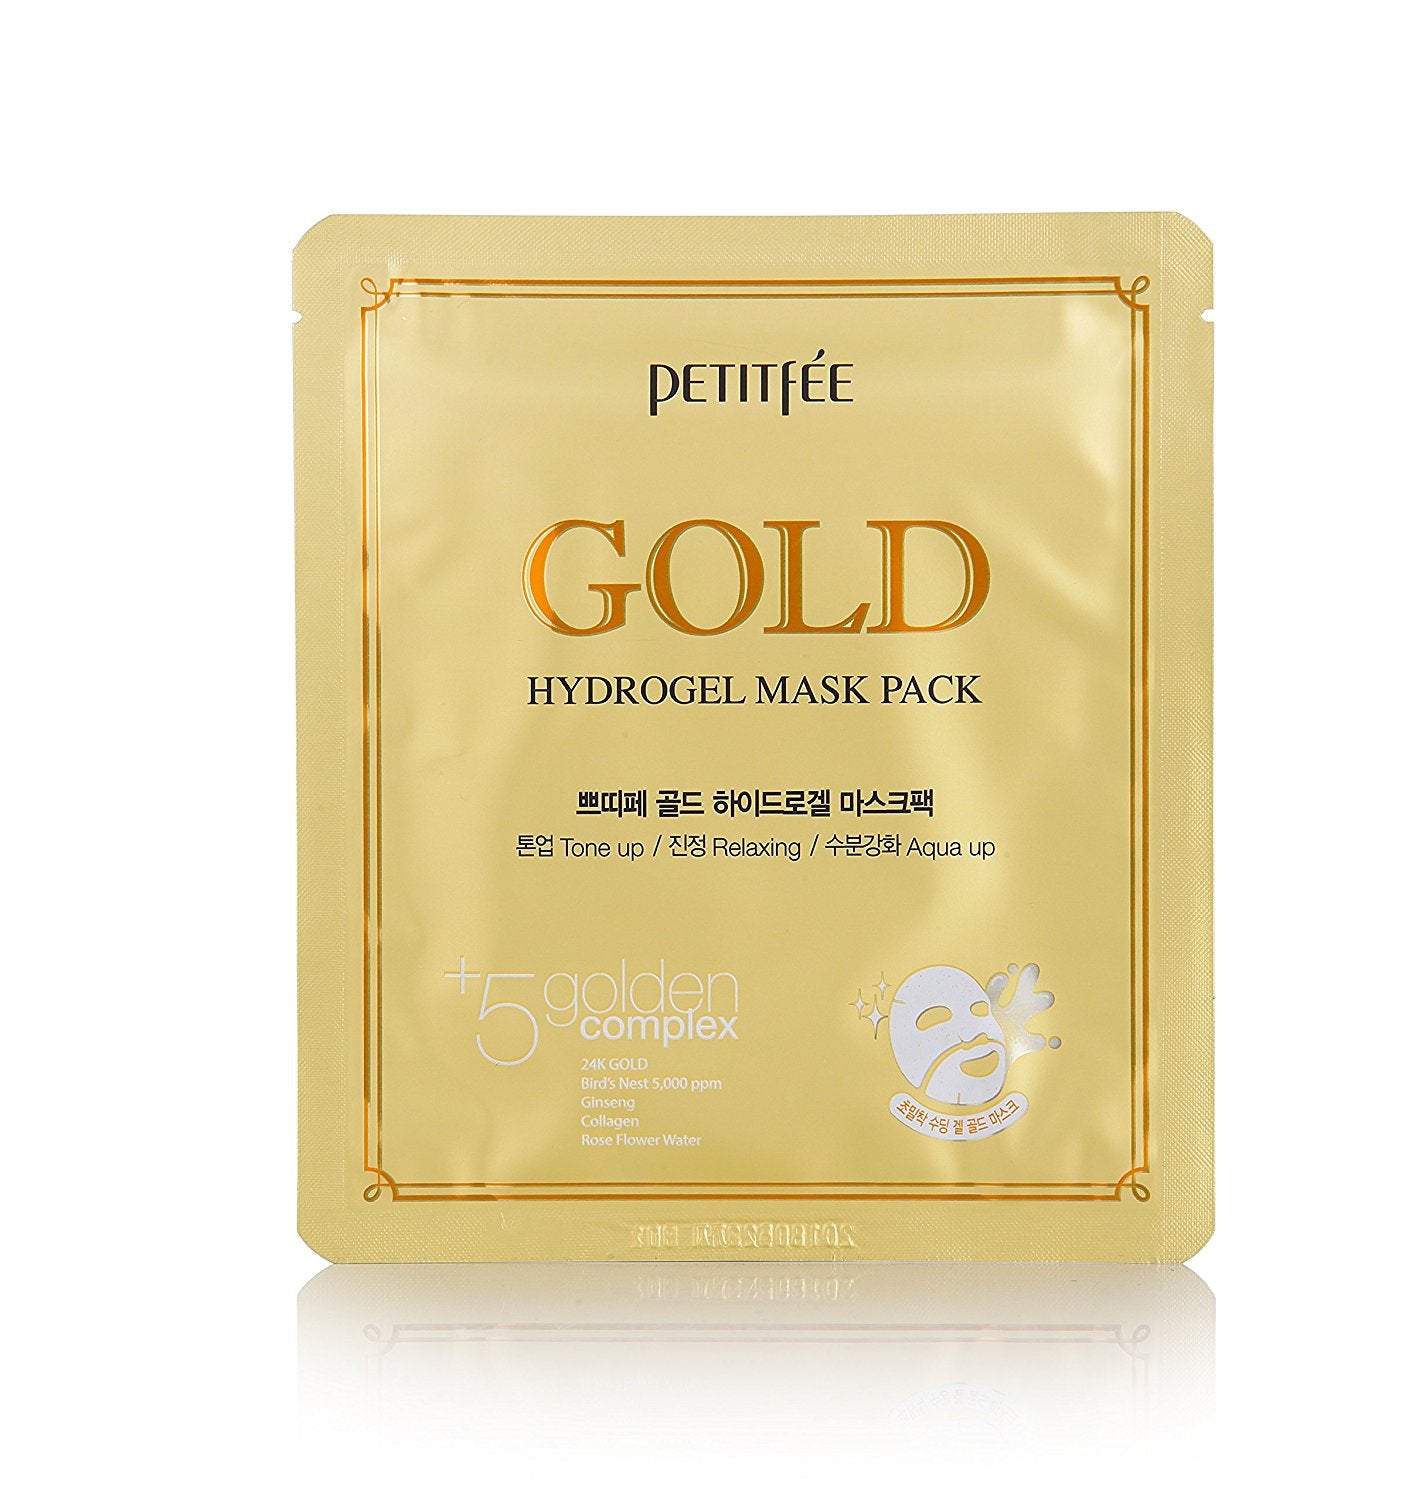 Petitfee Gold Hydrogel Masks 5 Sheets